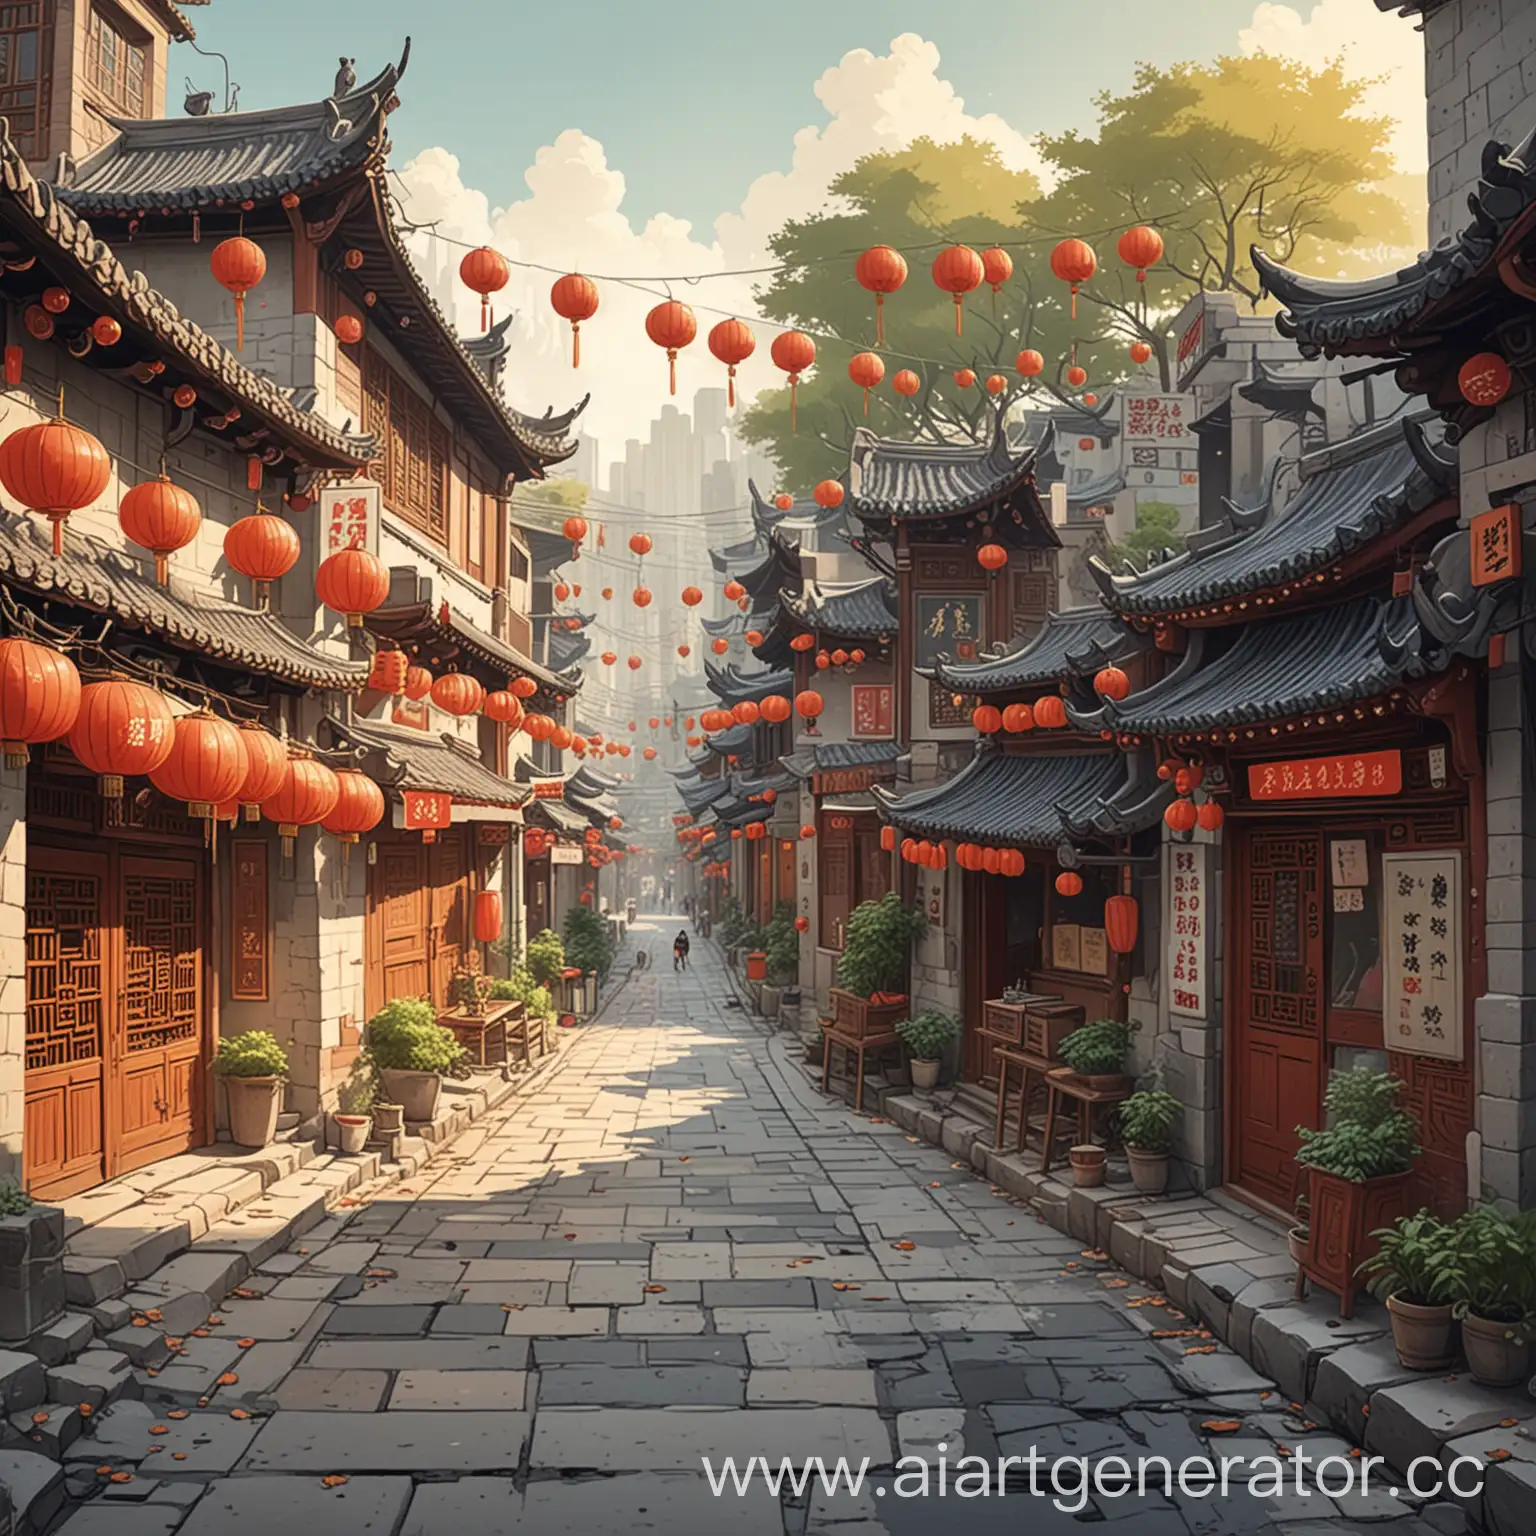 Colorful-Cartoon-Street-Scene-in-China